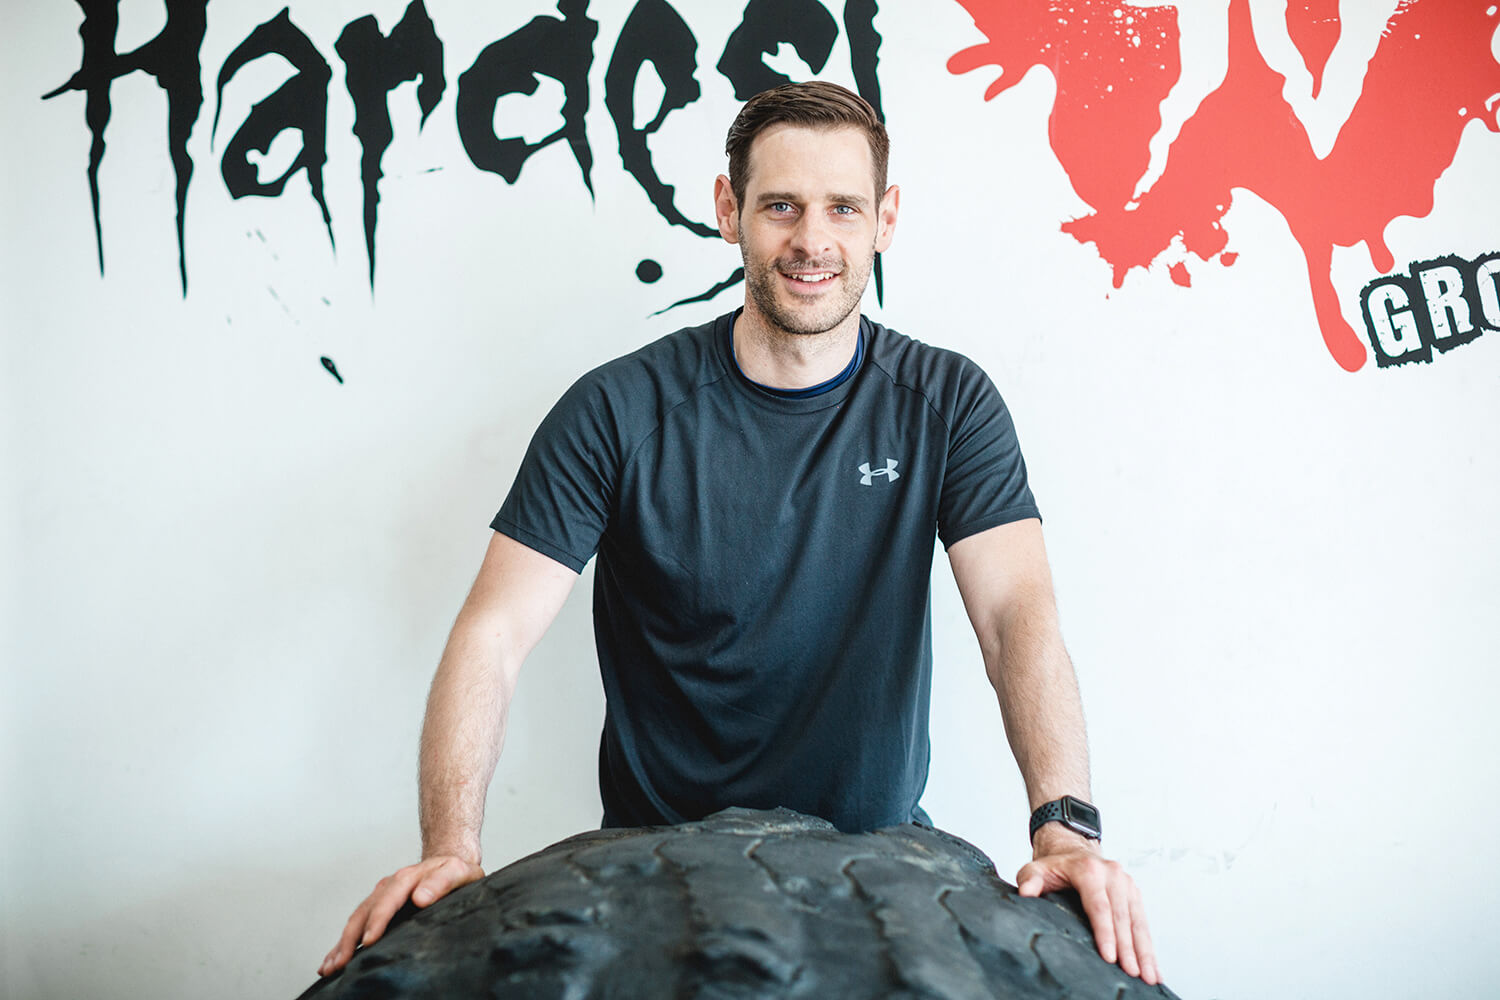 Patrick Hardest30 High Intensiv Training Customer with hudge wheel